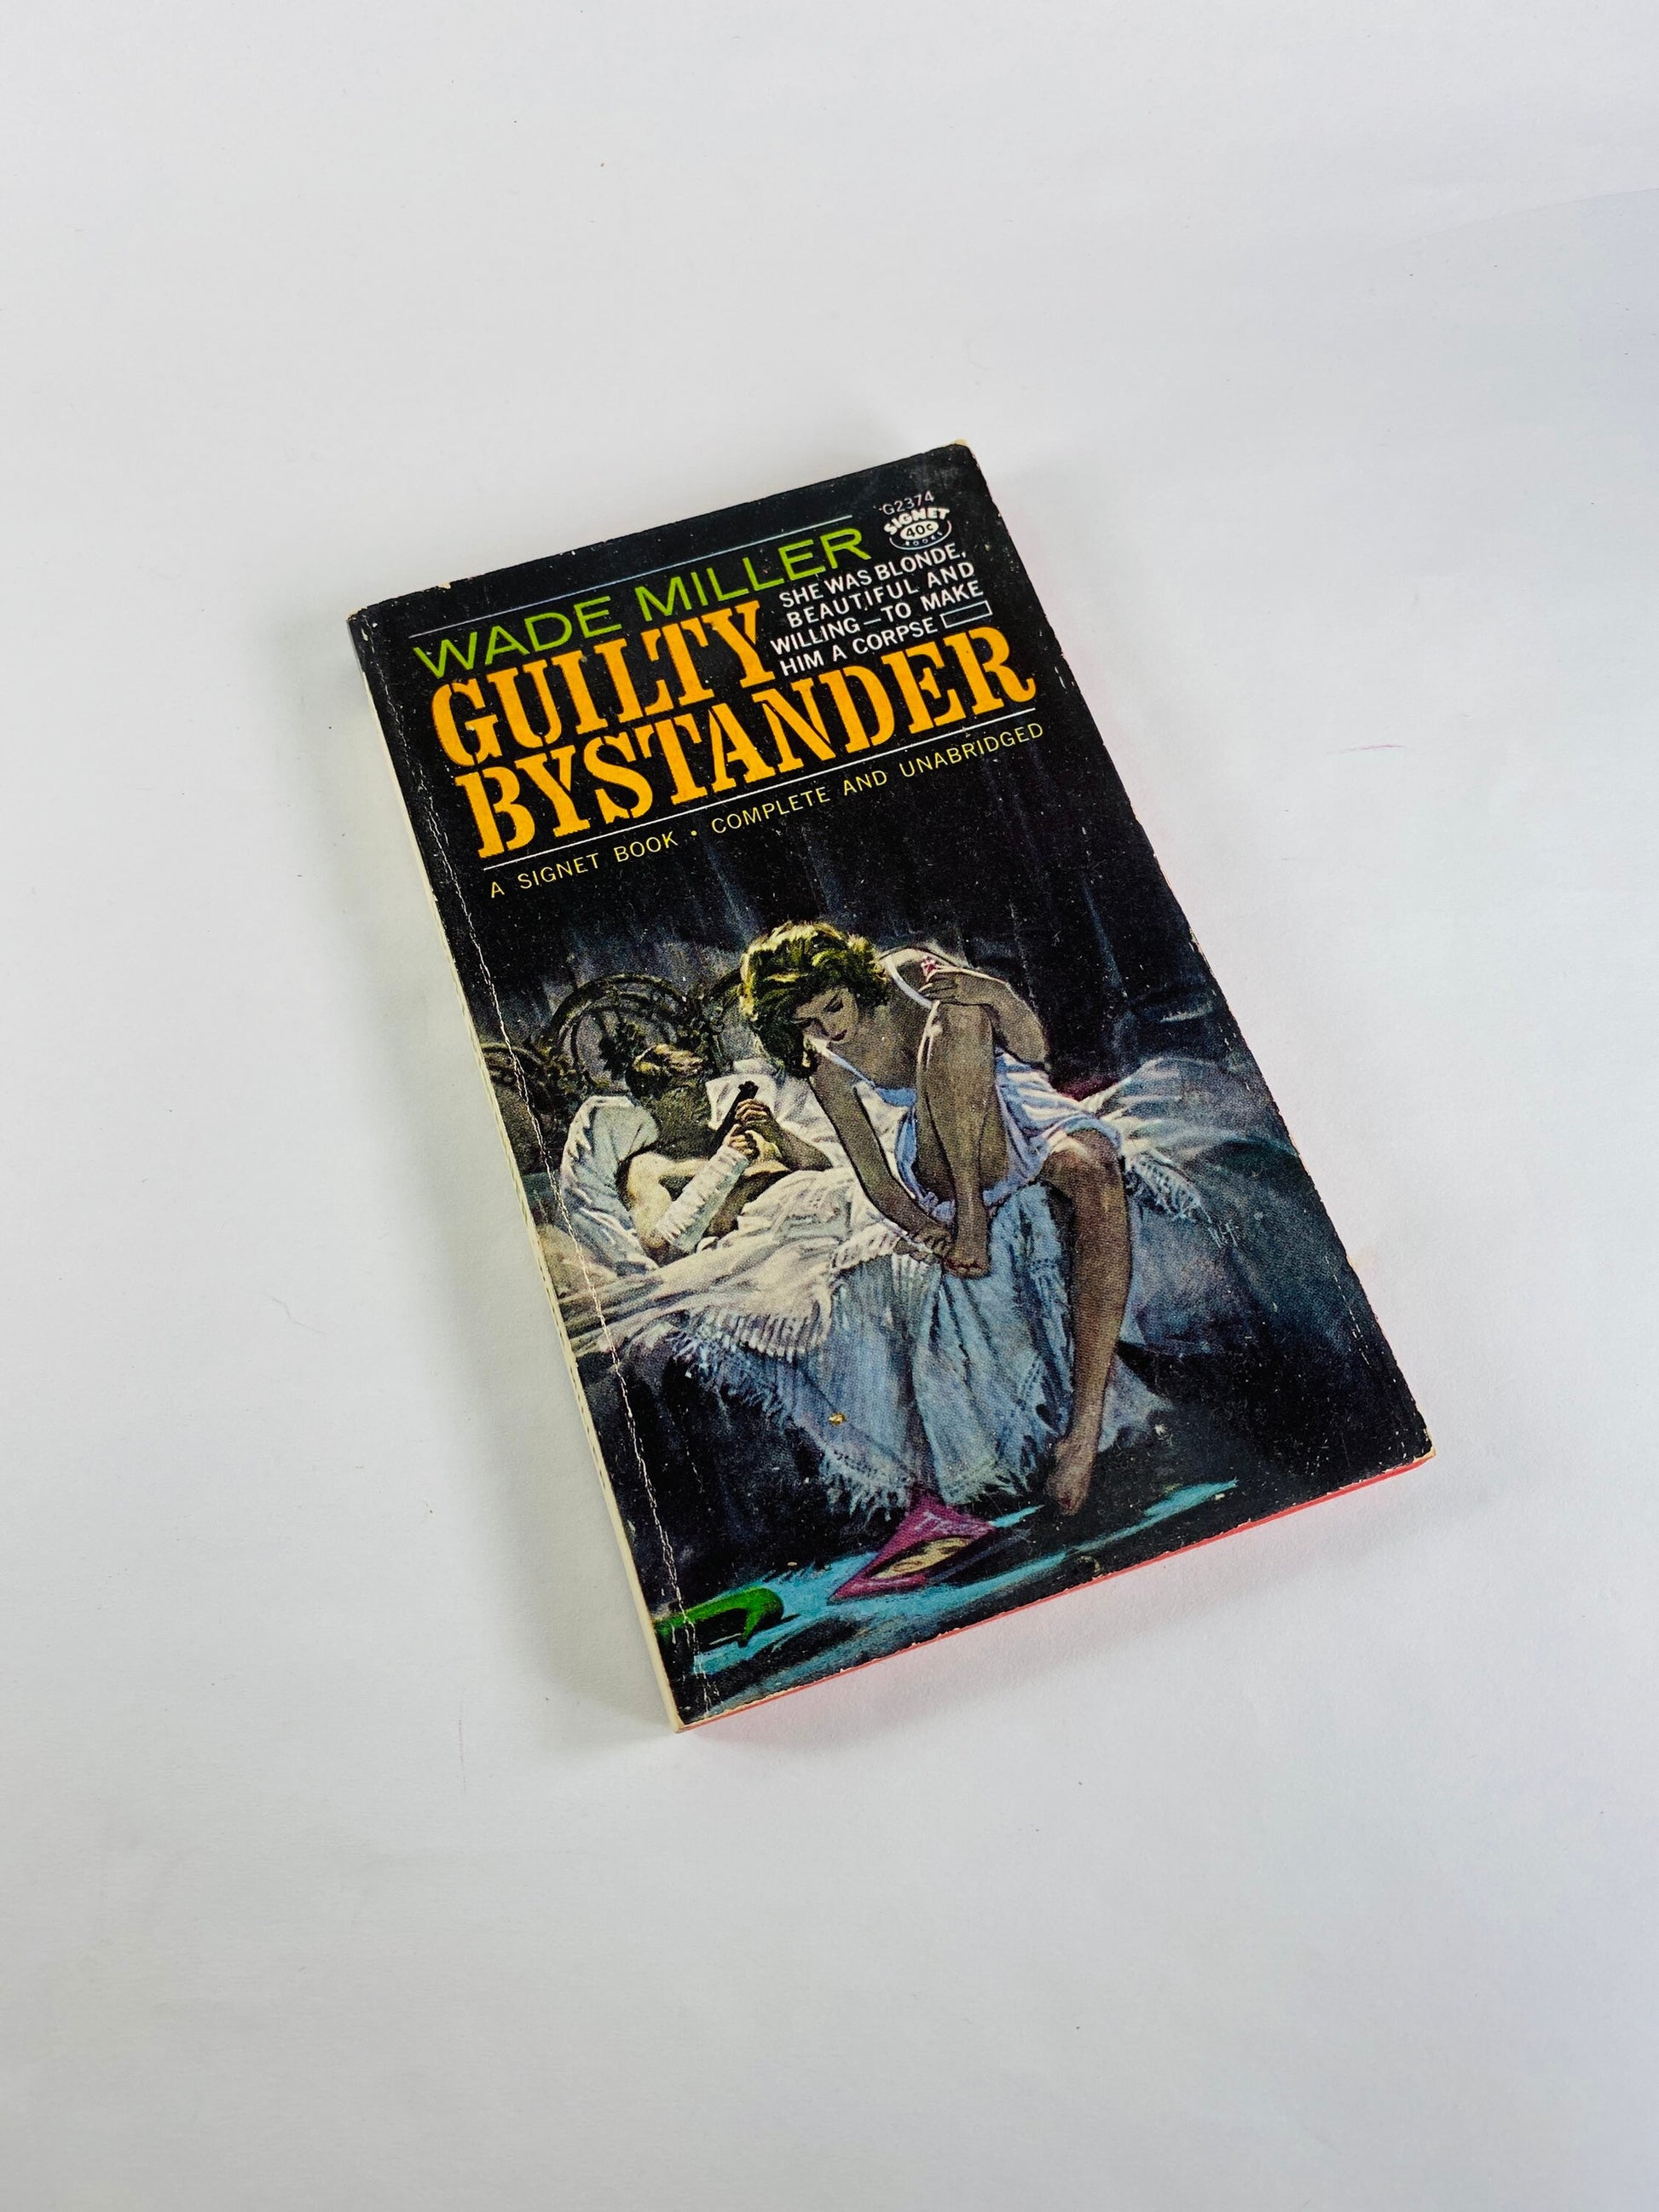 Vintage Wade Miller paperback book 1950s- 1960s erotica smut murder mystery crime fiction pulp